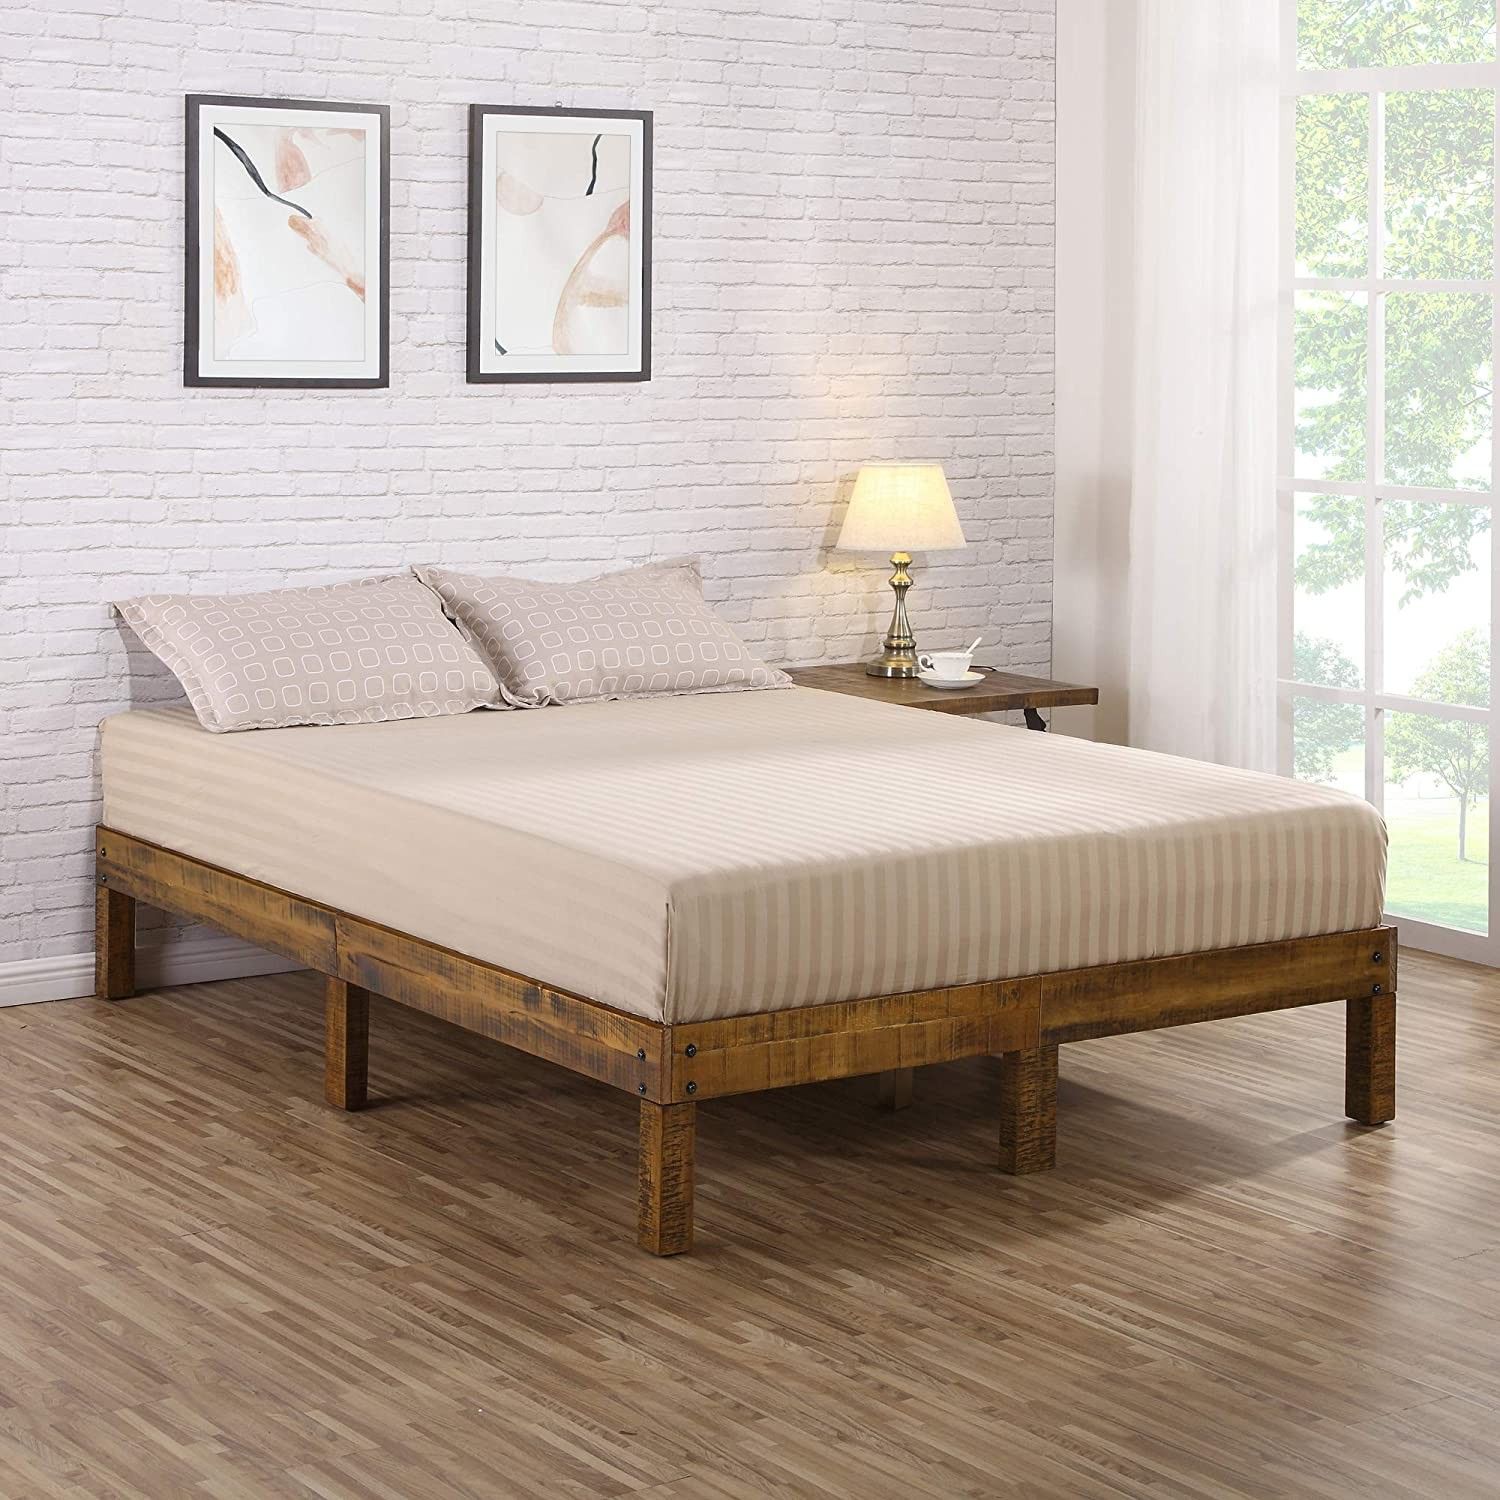 14 inch Solid Wood Platform Bed, Queen Size